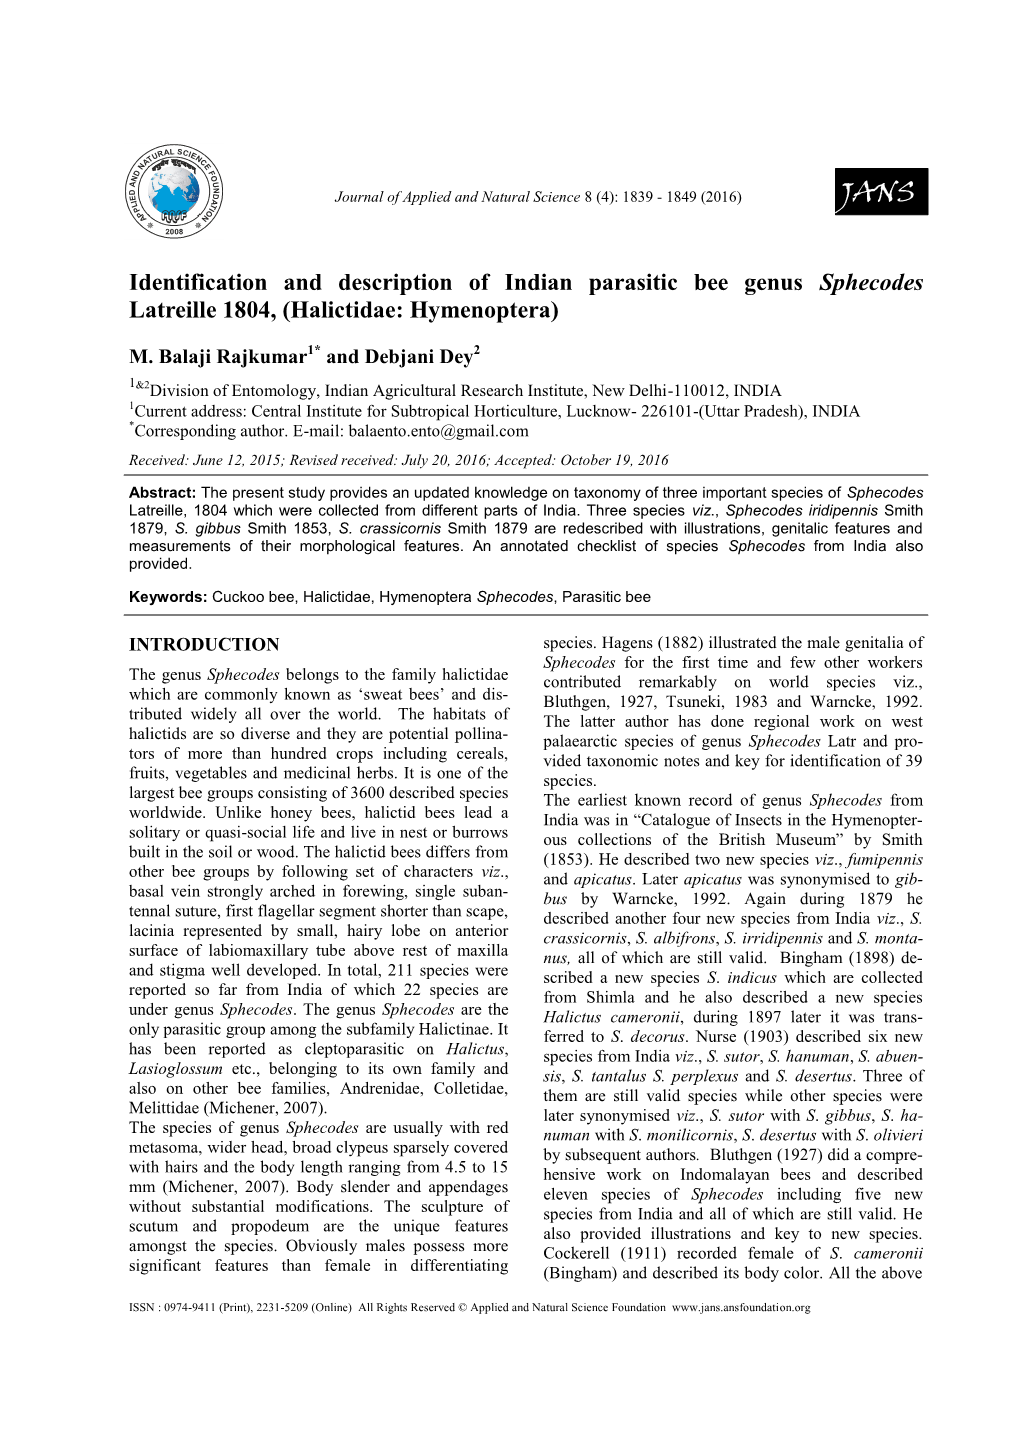 Identification and Description of Indian Parasitic Bee Genus Sphecodes Latreille 1804, (Halictidae: Hymenoptera)